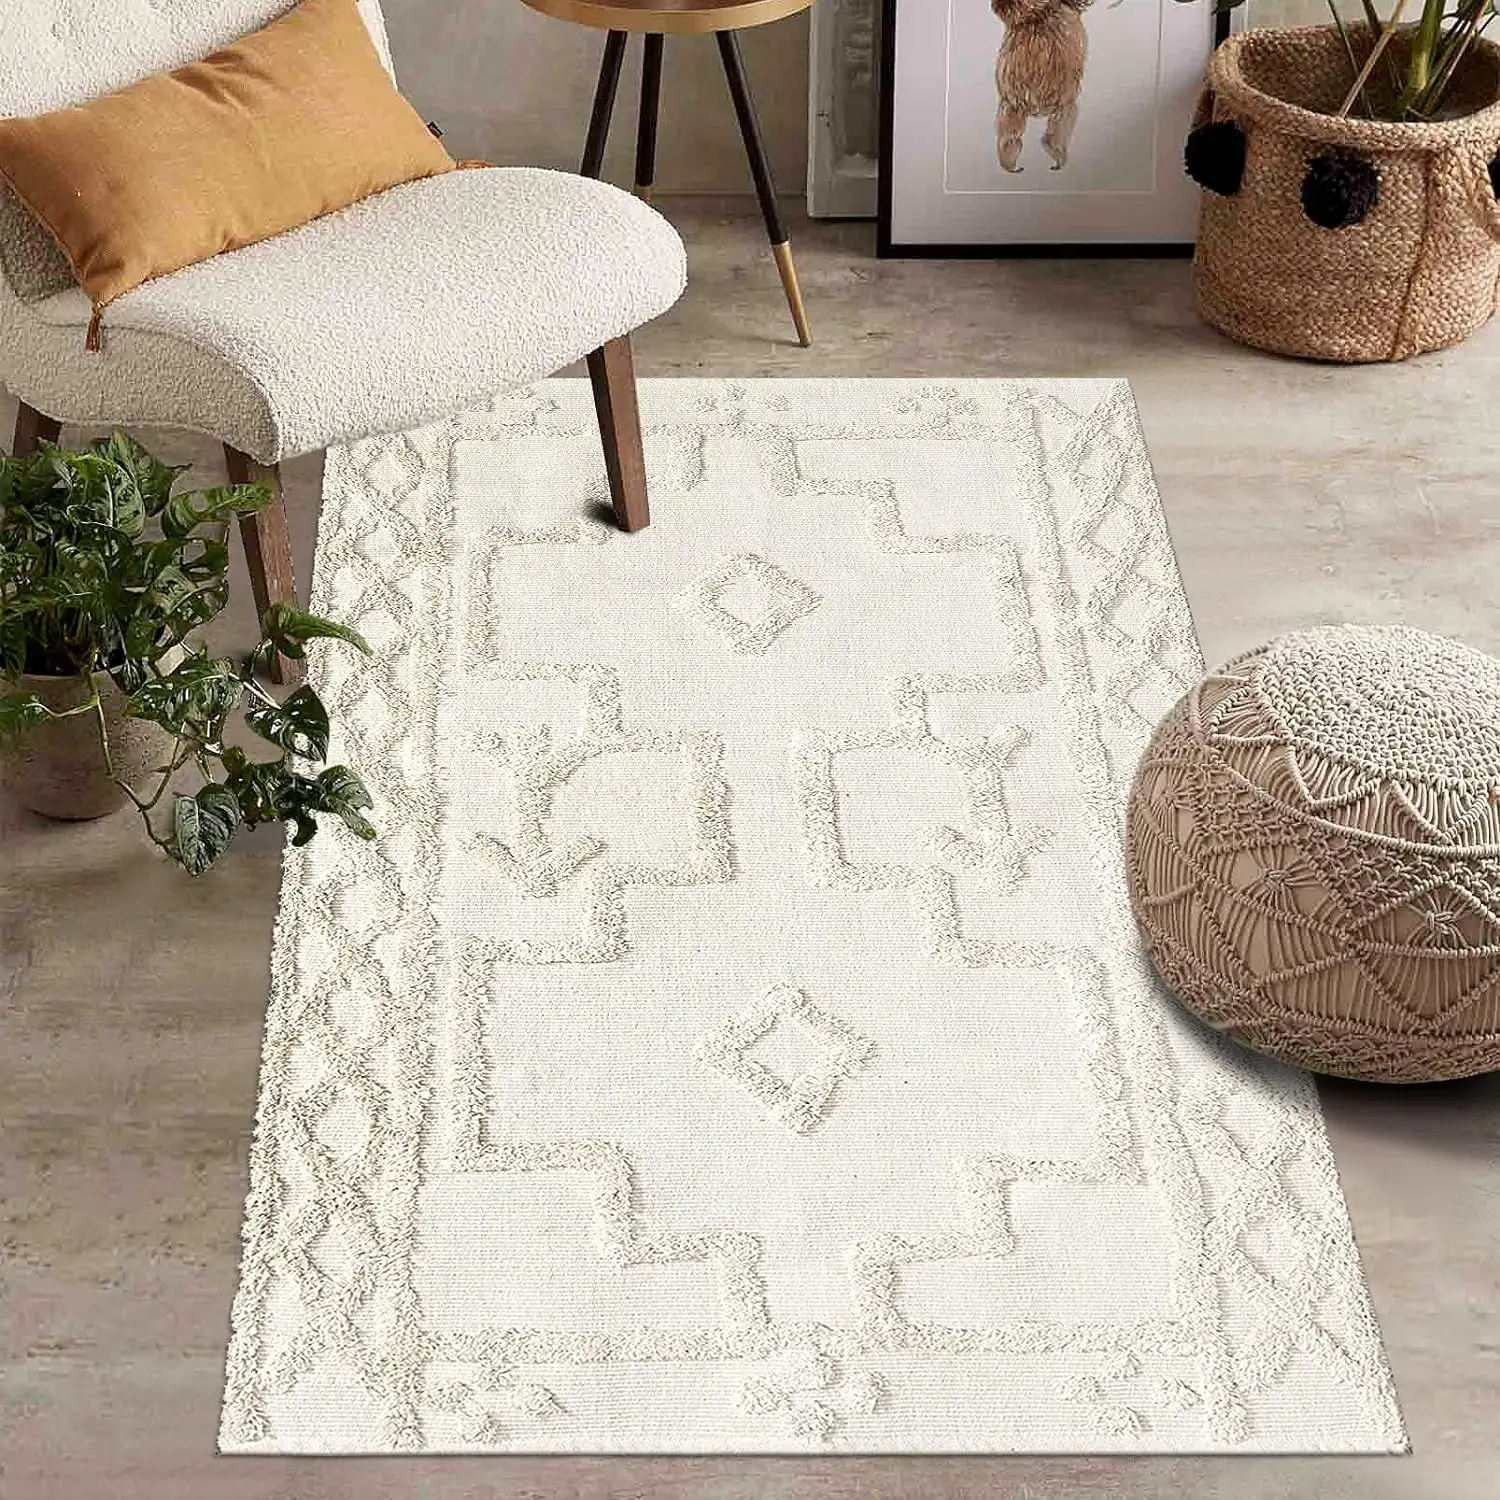 CF New All-match simple Fresh Advanced Textile alfombras sala de estar región dedicada Machine House Hold lavable